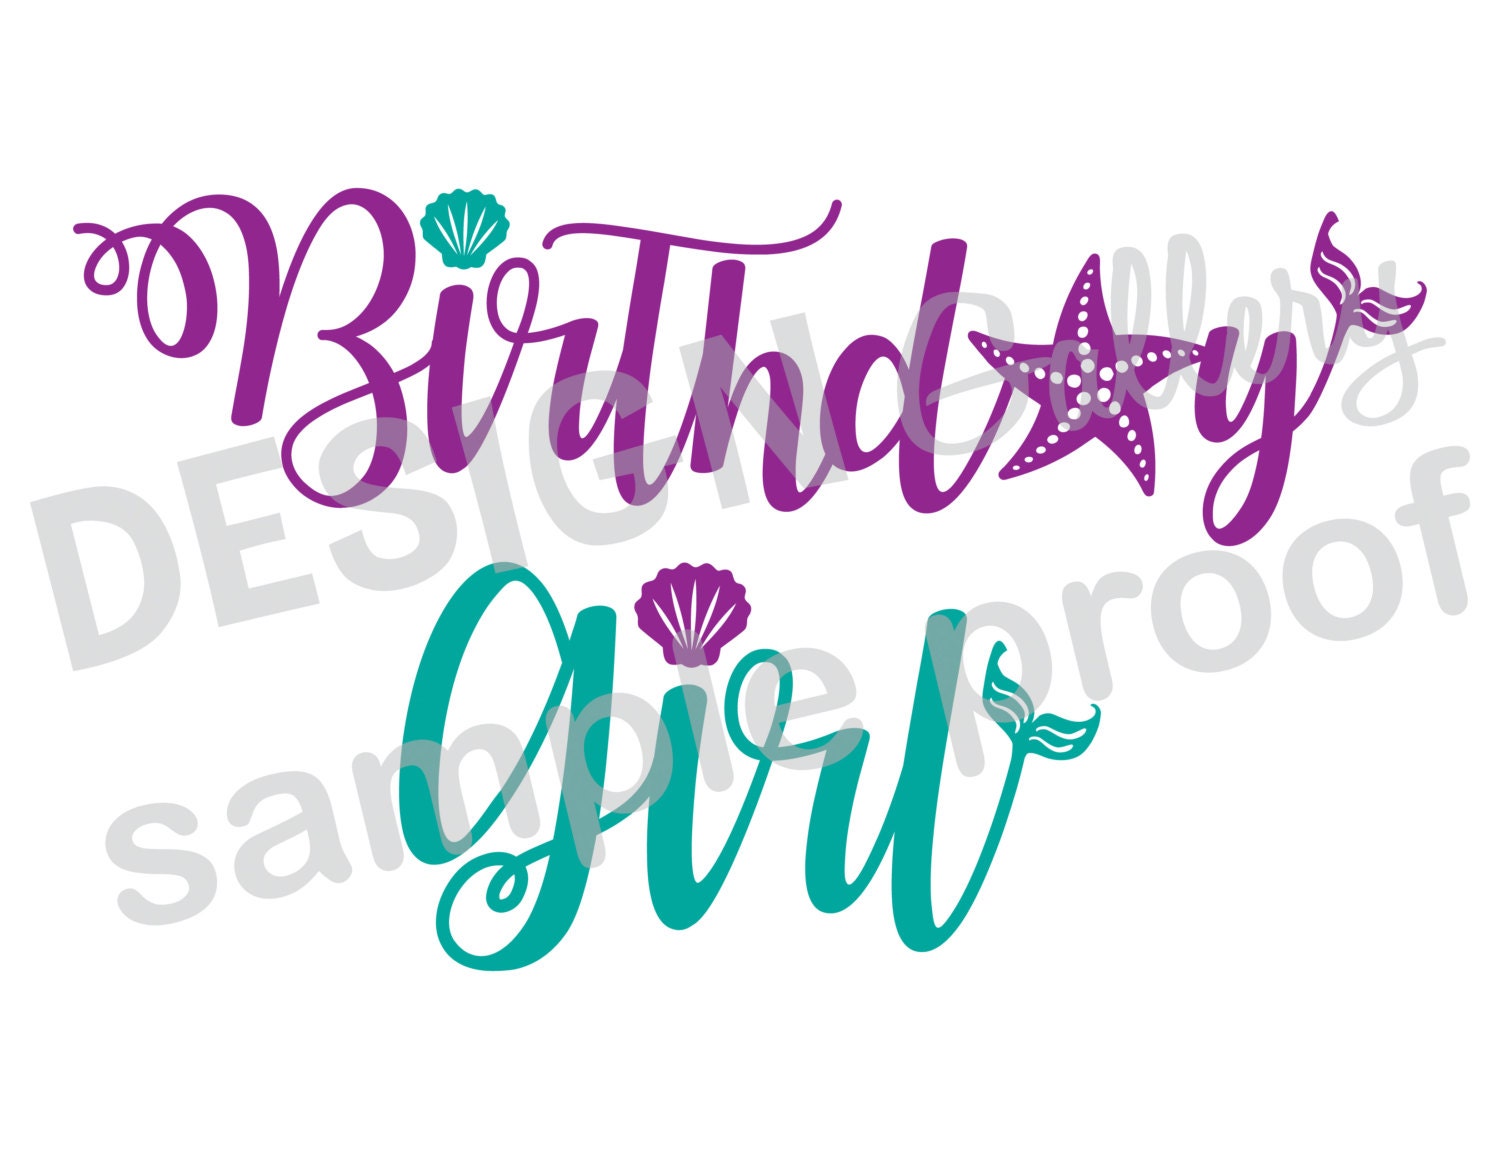 Download Birthday Girl Mermaid style image JPG png & SVG DXF cut